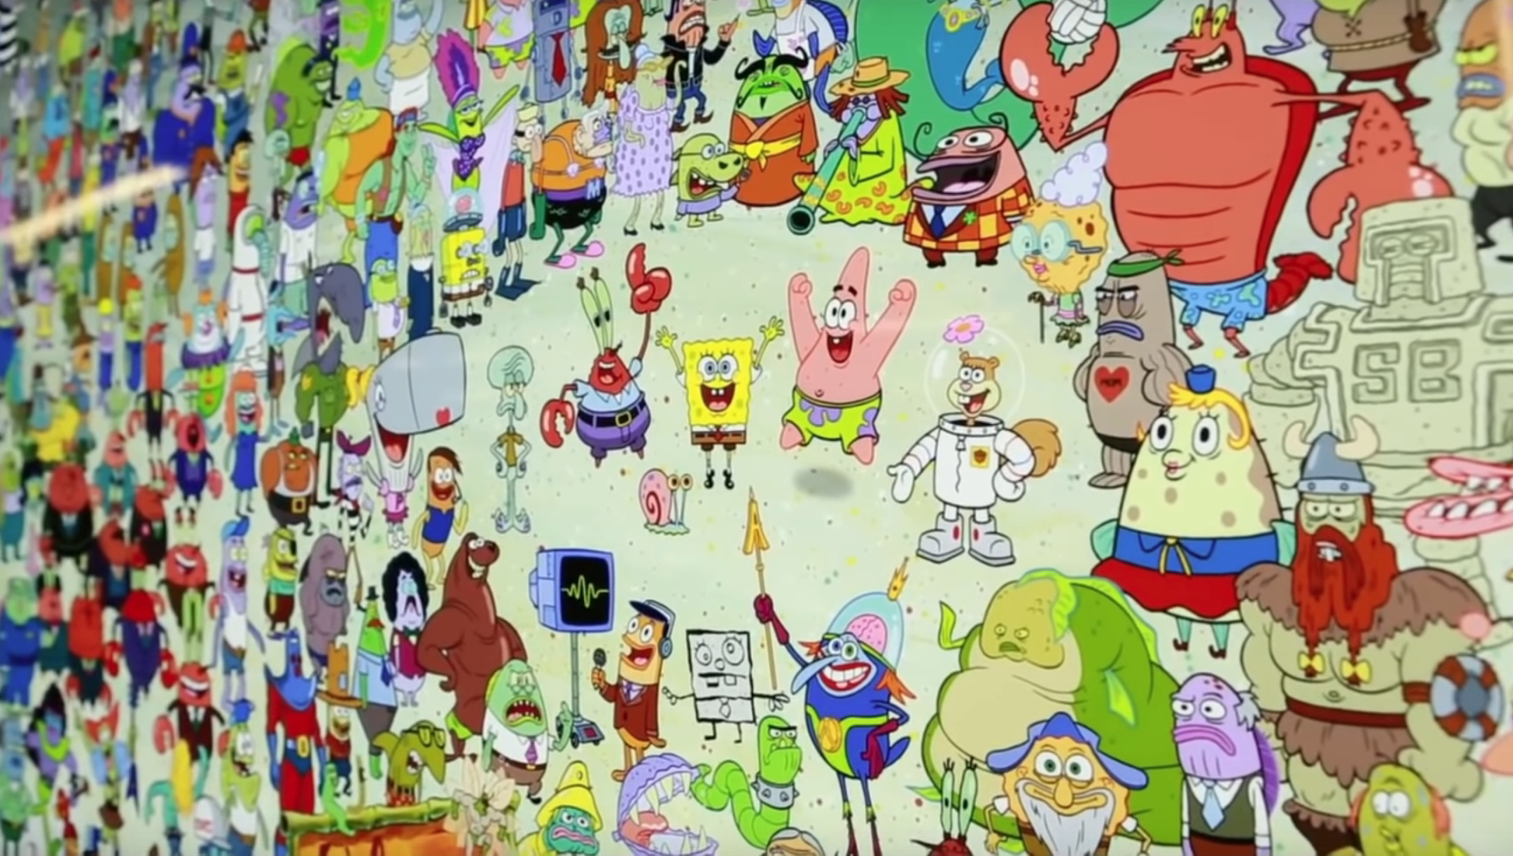 spongebob krabby patty episode